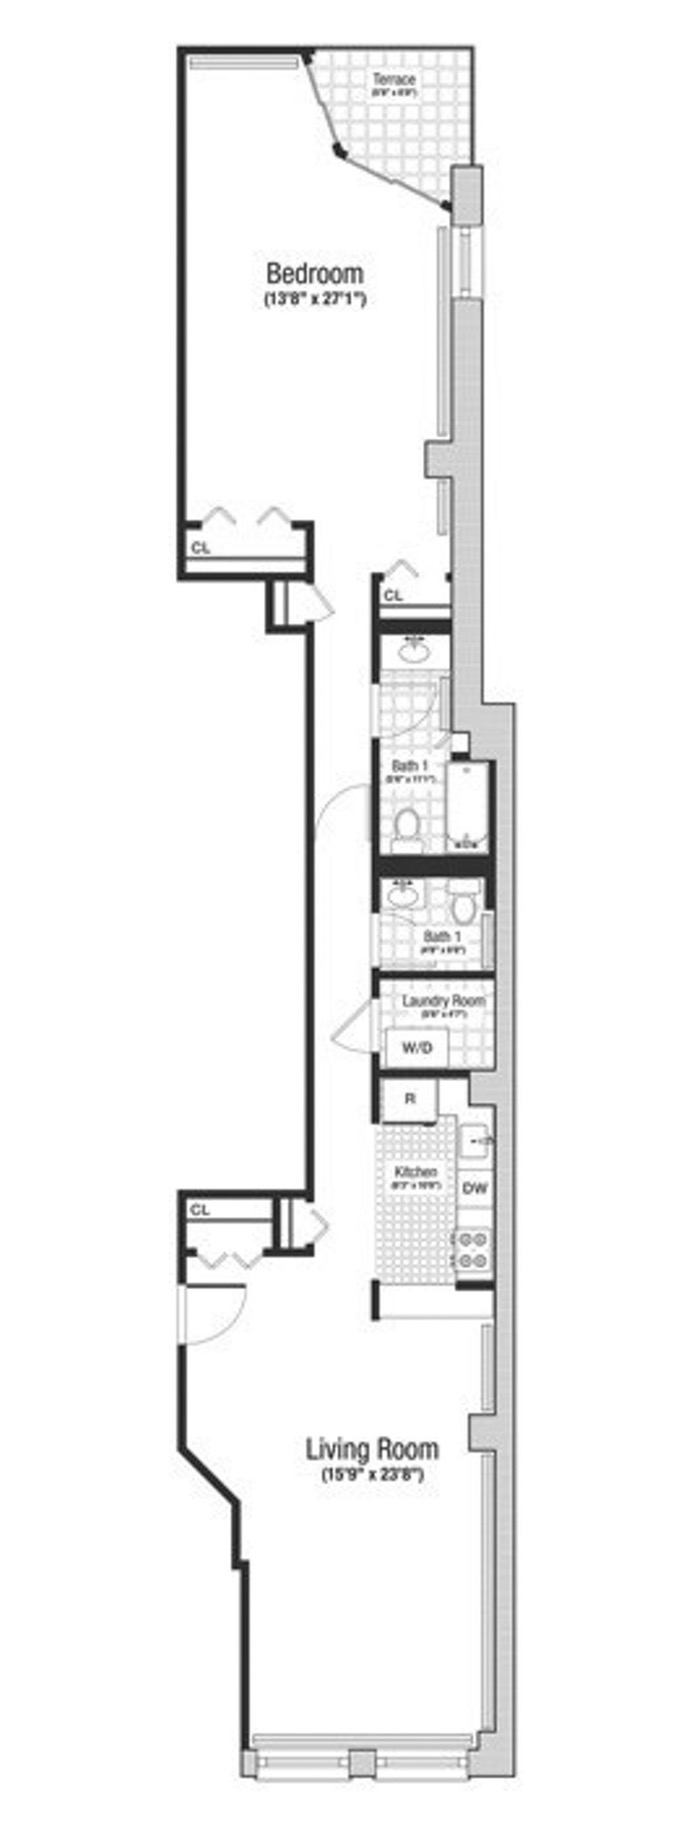 Floorplan for 36 Laight Street, 3A